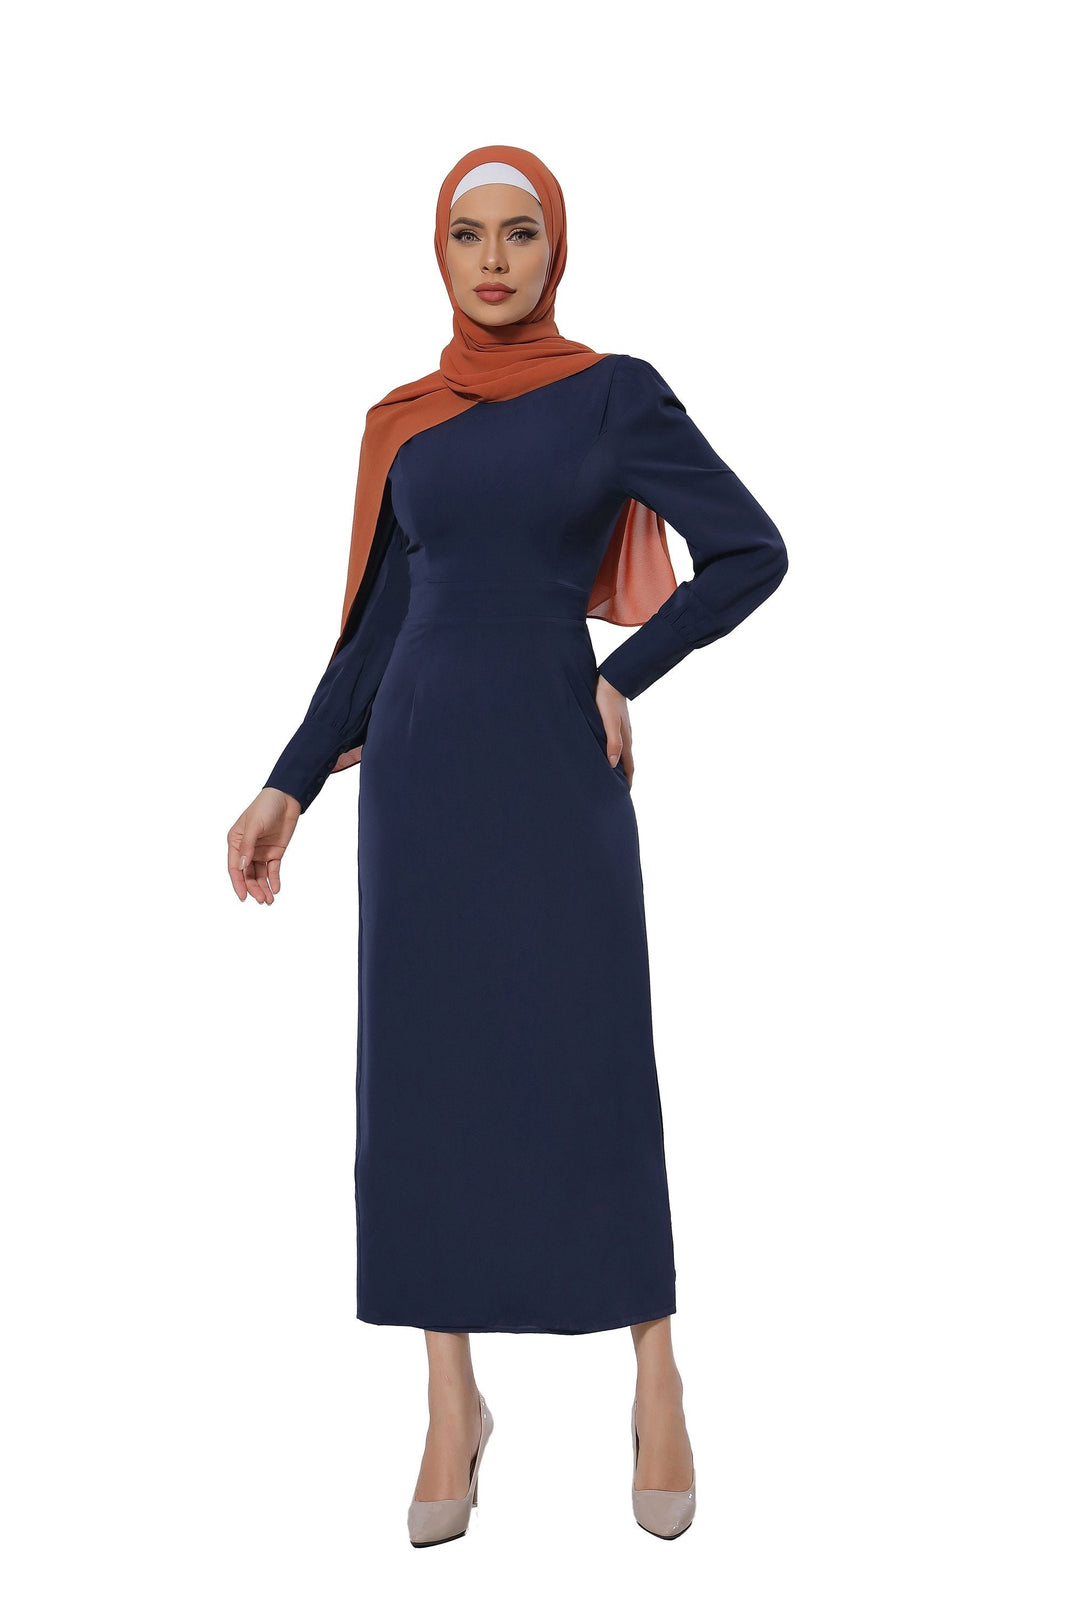 Urban Modesty - Navy Blue Perfectly Pencil Long Sleeve Maxi Dress